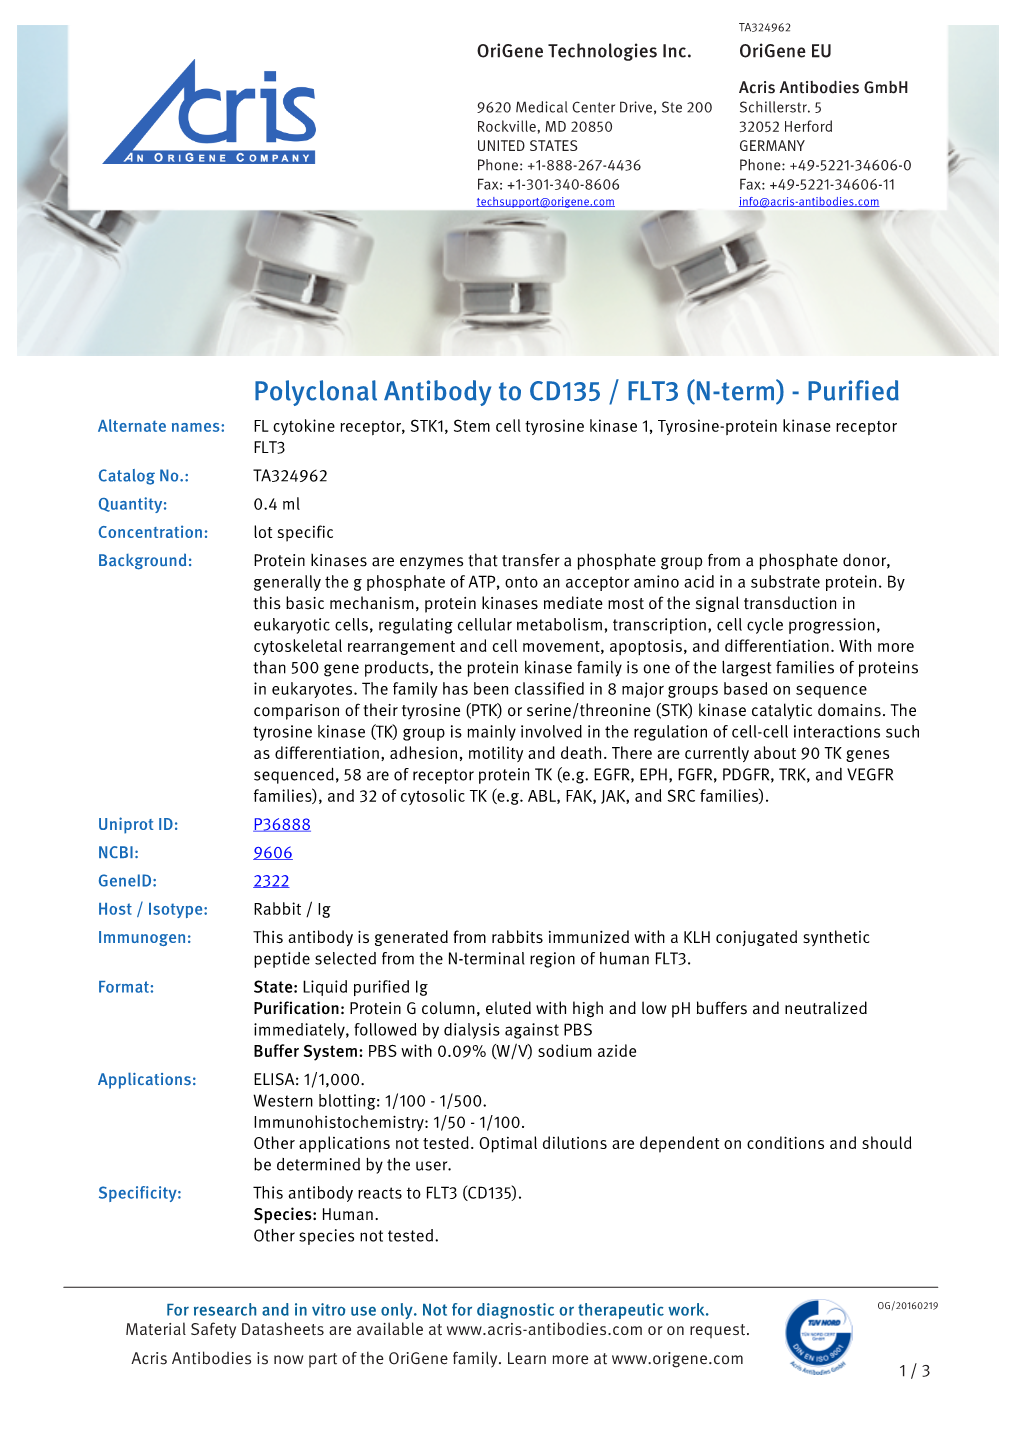 Polyclonal Antibody to CD135 / FLT3 (N-Term